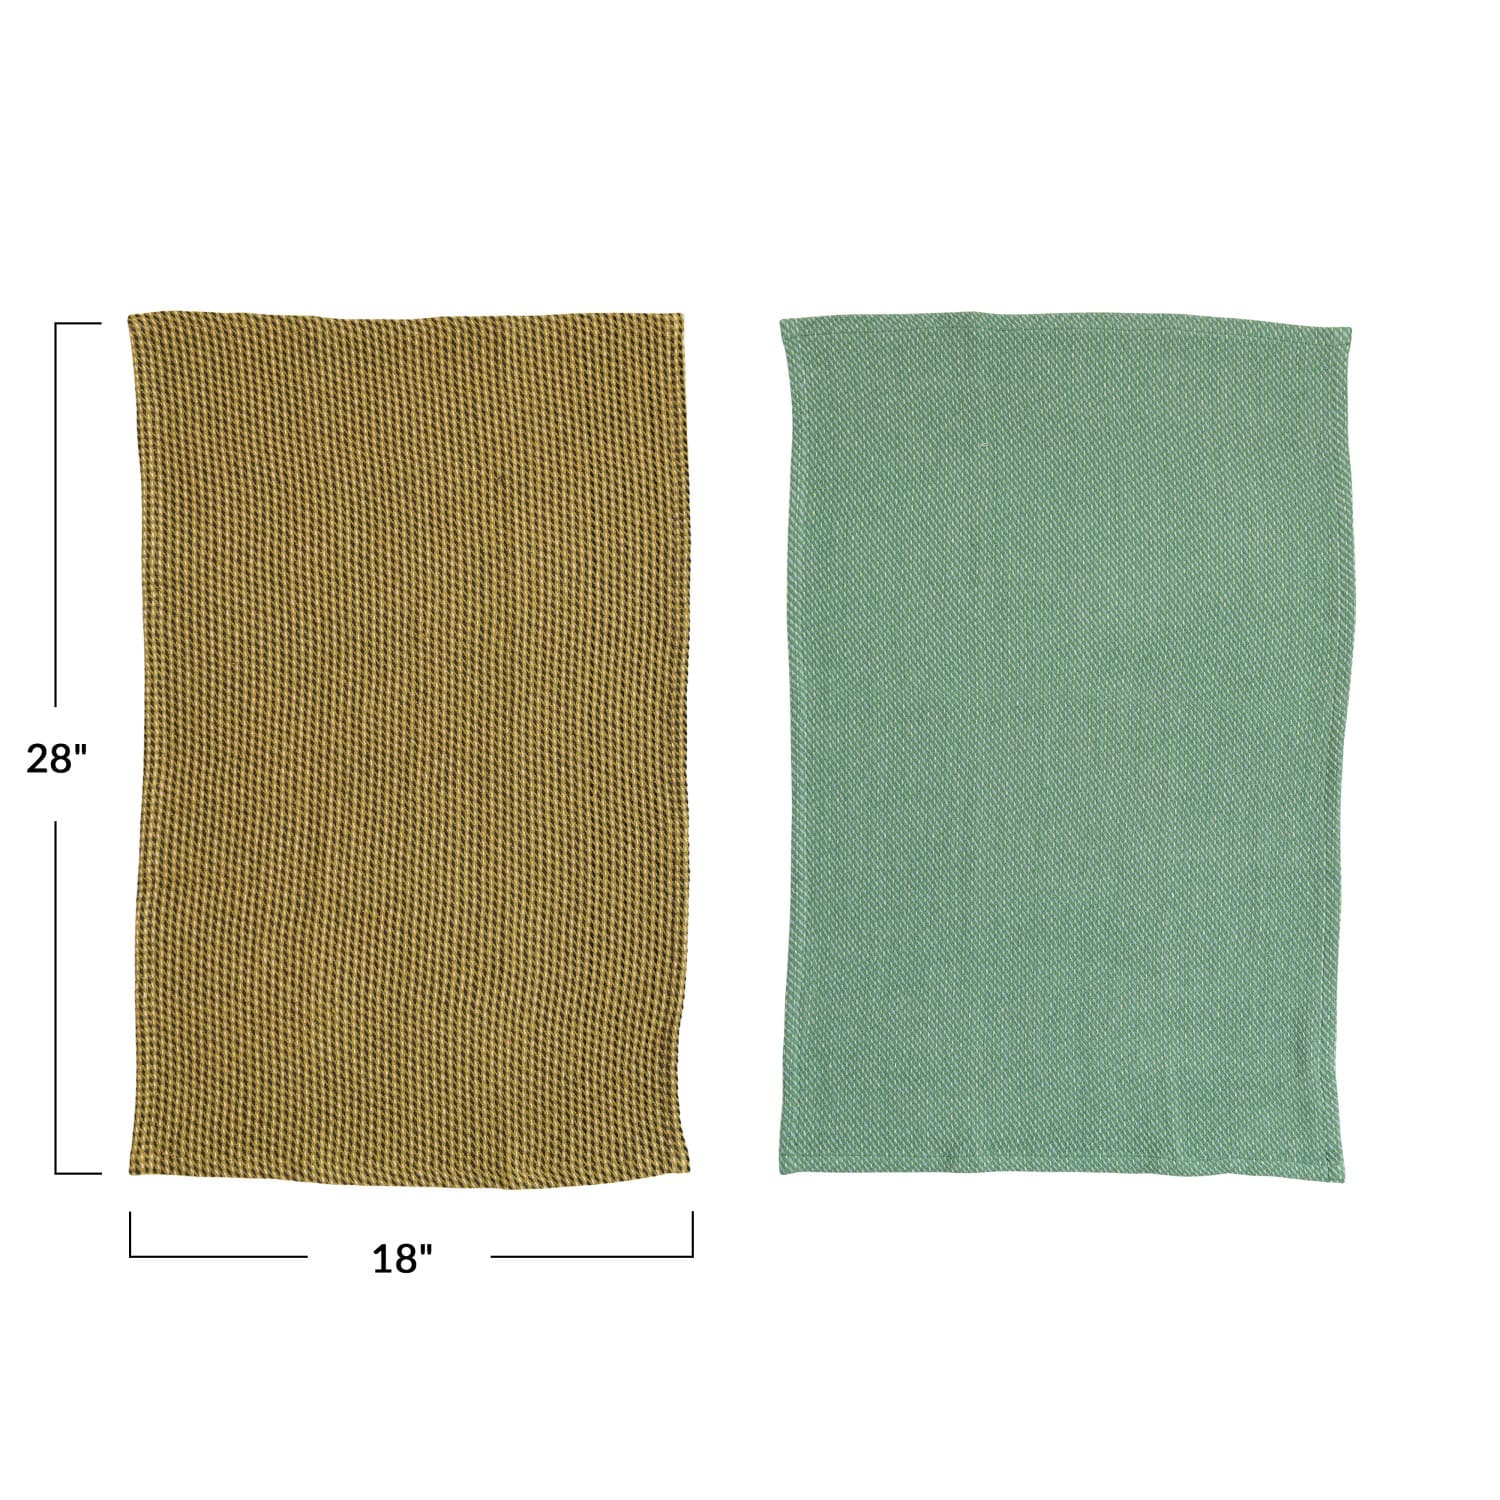 Teal &#x26; Olive Cotton Waffle Weave Tea Towel Set in Bag